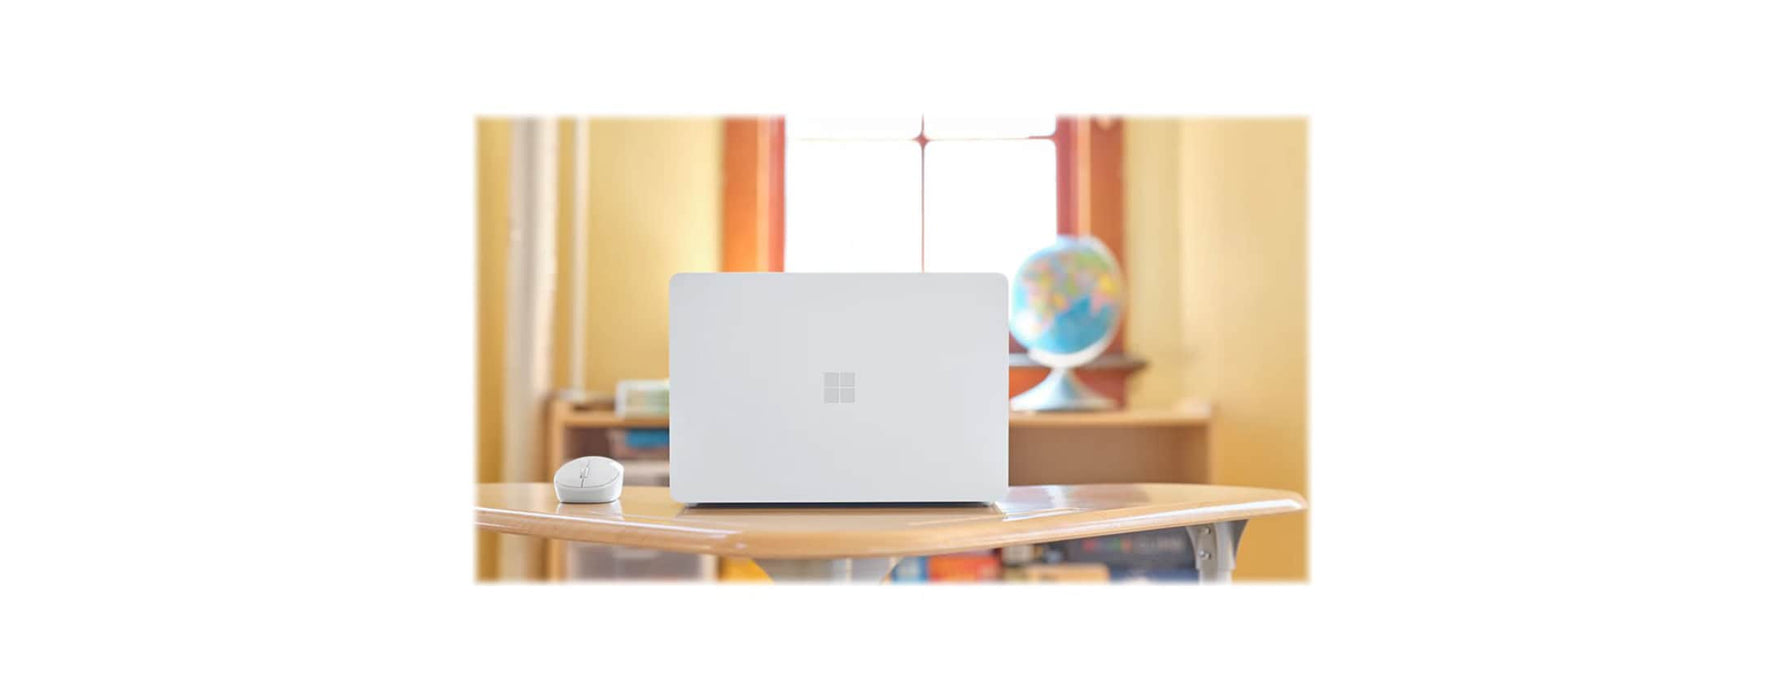 Microsoft Surface Laptop SE - Intel Celeron N4120 / 1.1 GHz - Win 11 SE - UHD Graphics 600 - 8 GB RAM - 128 GB eMMC - 11.6" 1366 x 768 (HD) - Wi-Fi 5 - glacier - academic, commercial